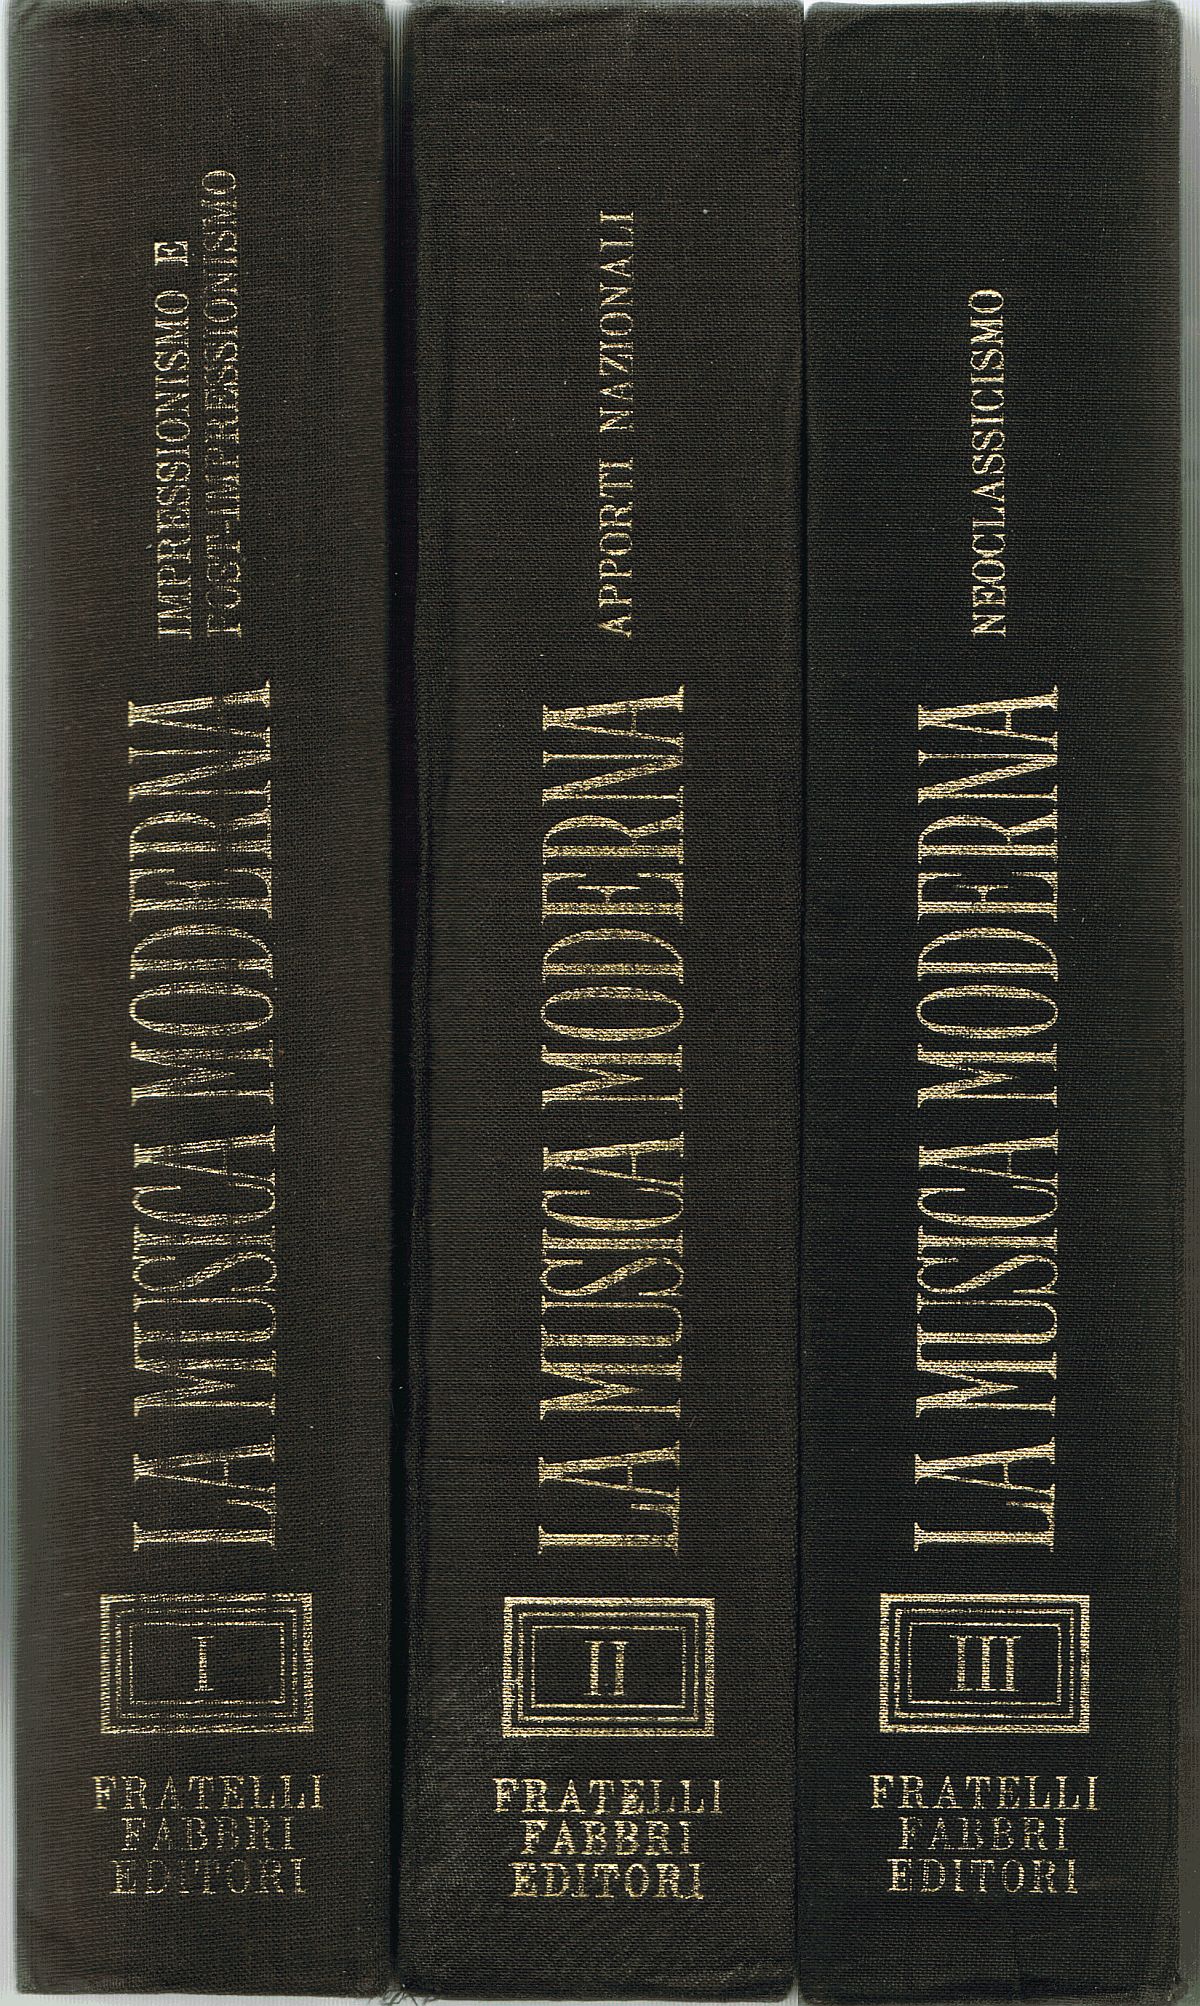 La musica moderna, Ed. Fratelli Fabbri, dos des 3 volumes, clicquer pour une vue agrandie